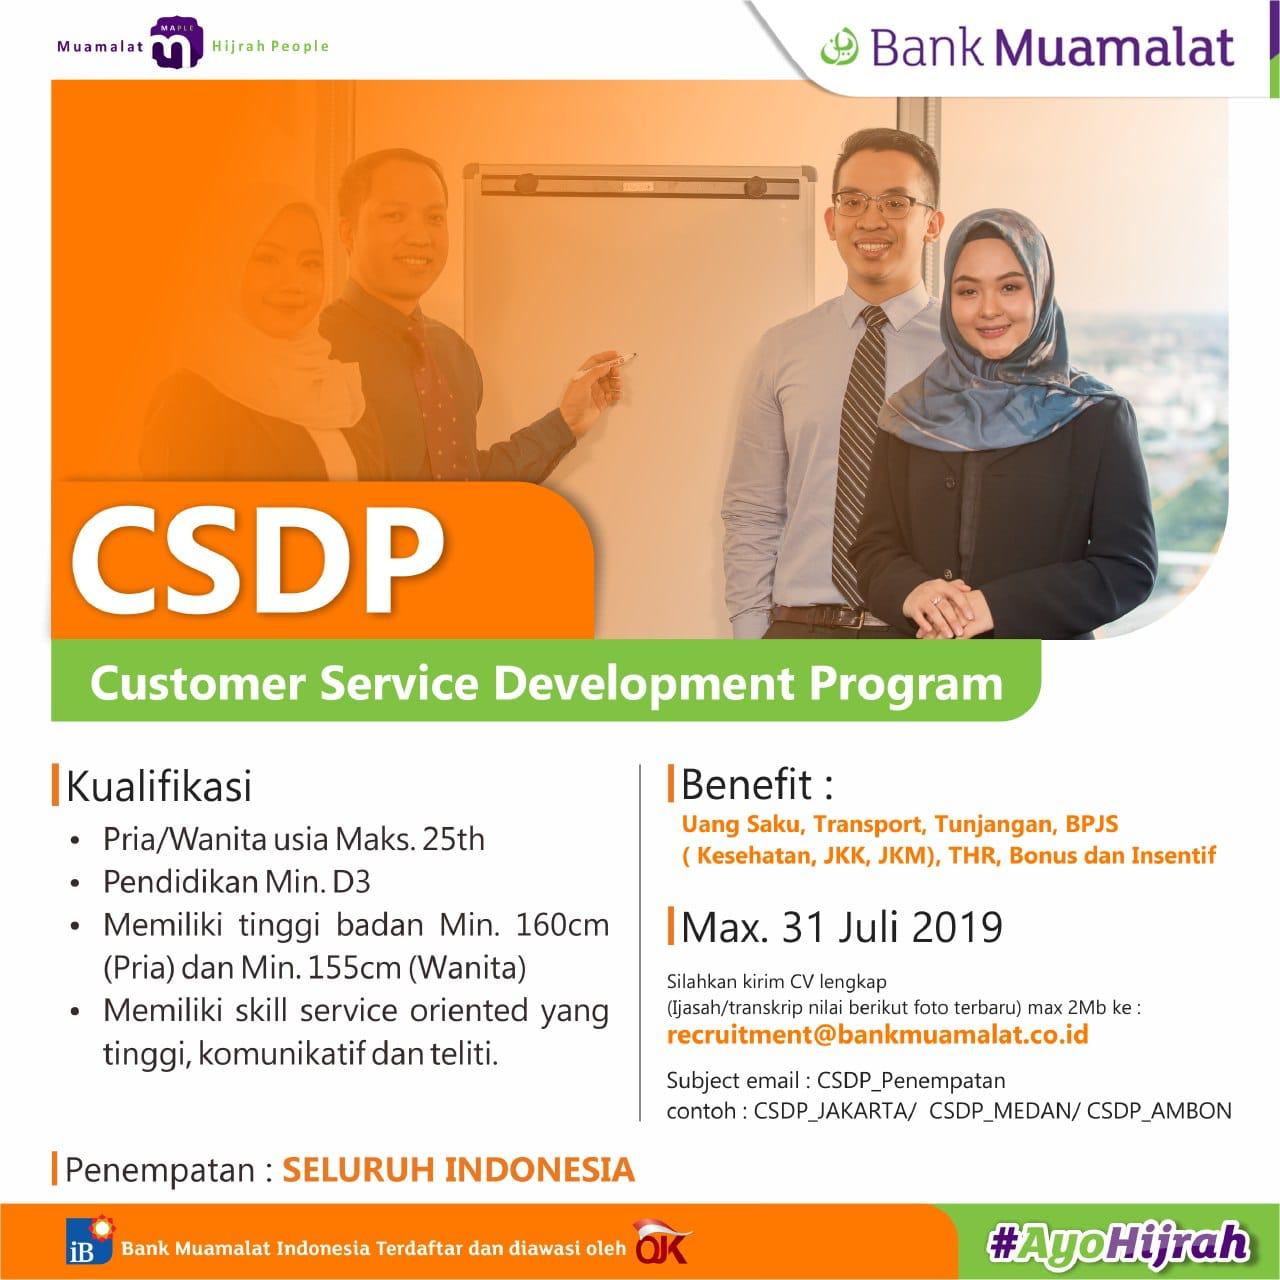 CUSTOMER SERVICE DEVELOPMENT PROGRAM (CSDP) BANK MUAMALAT